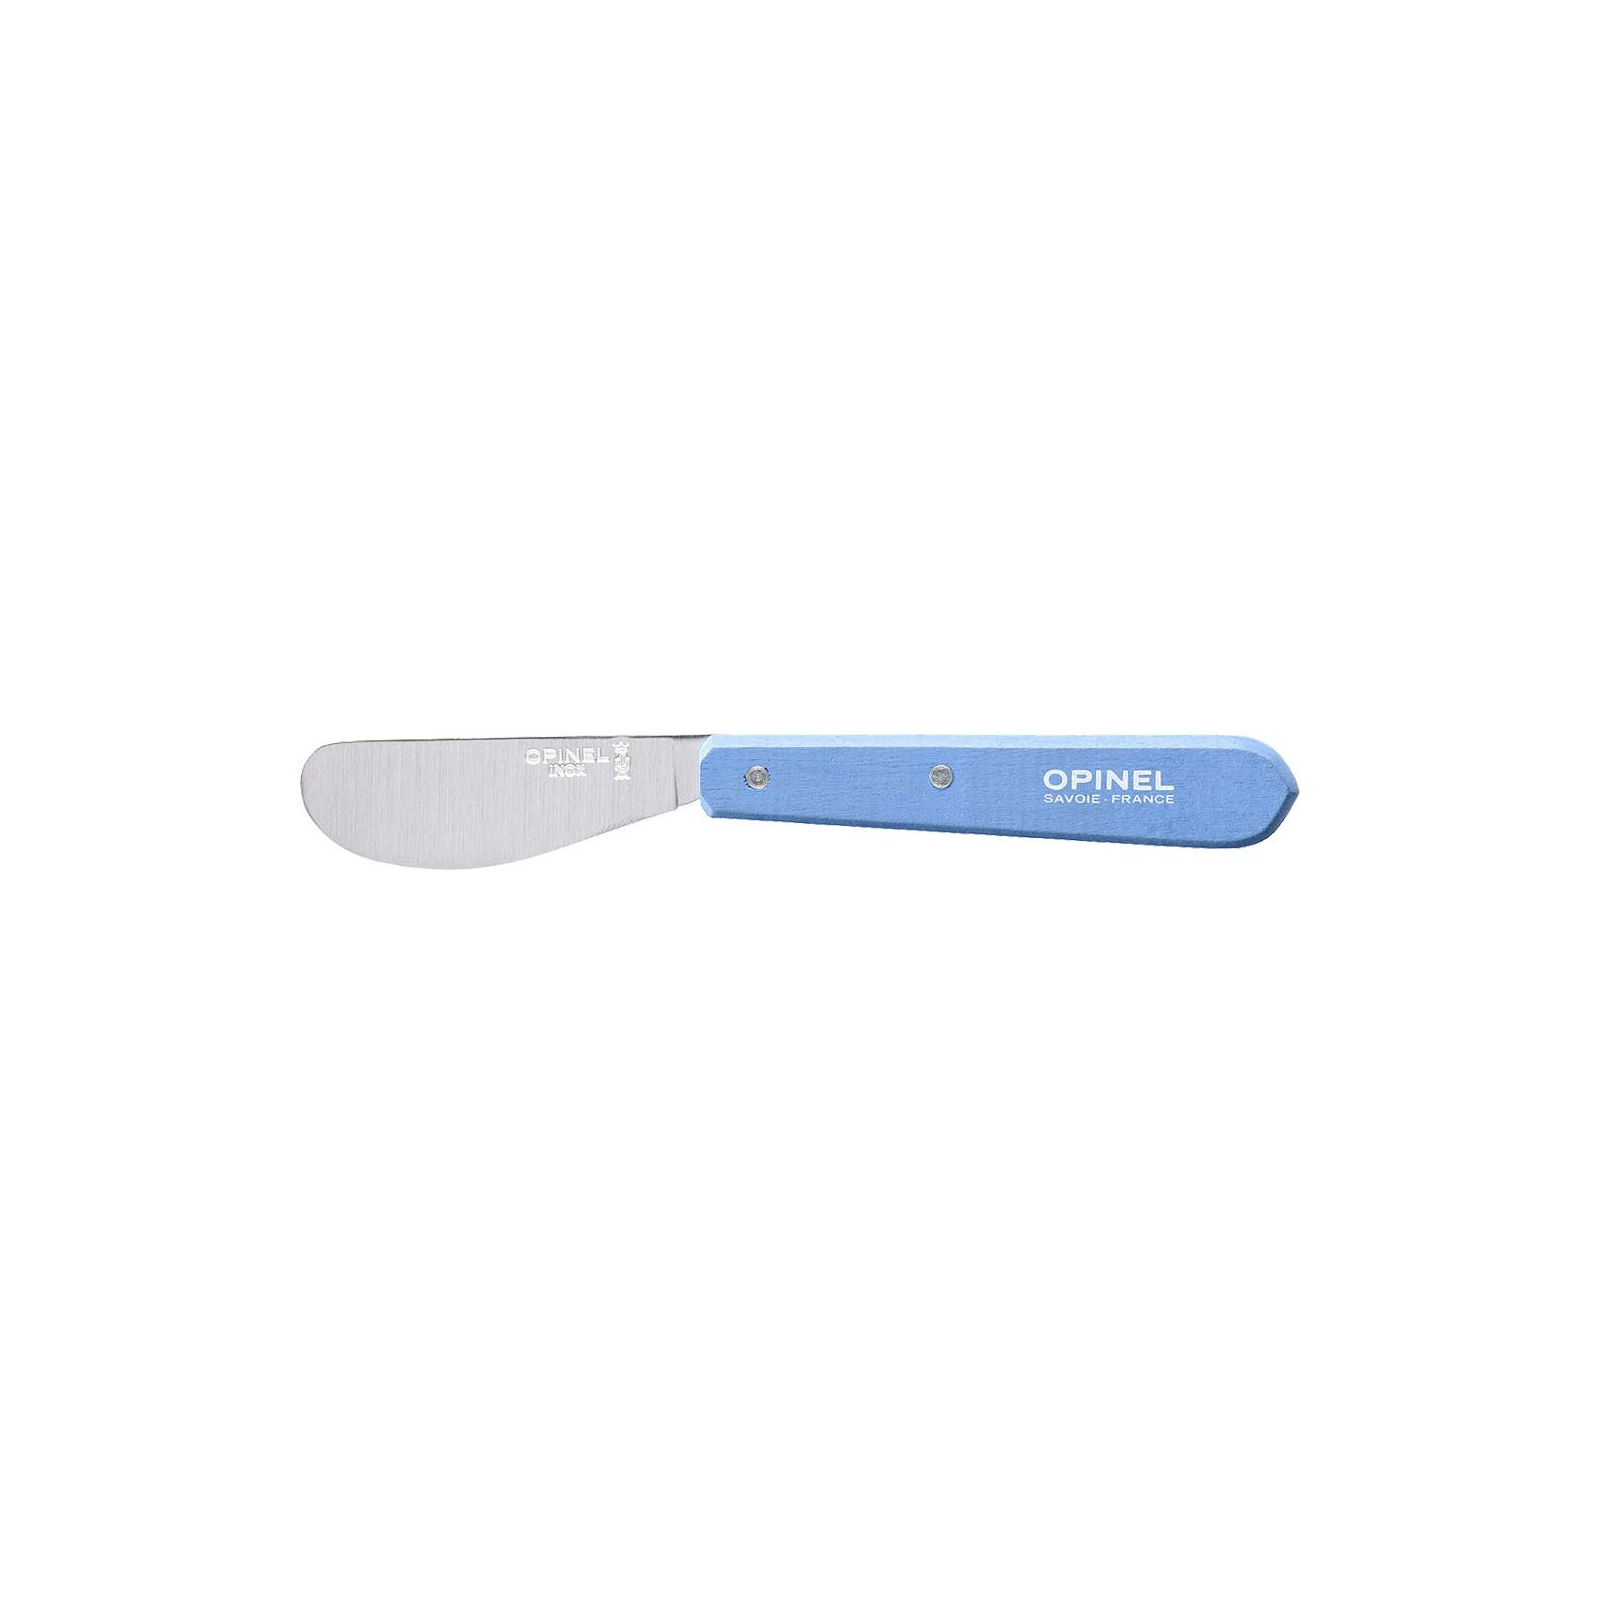 Кухонный нож Opinel №117 Spreading голубой (001382-b)